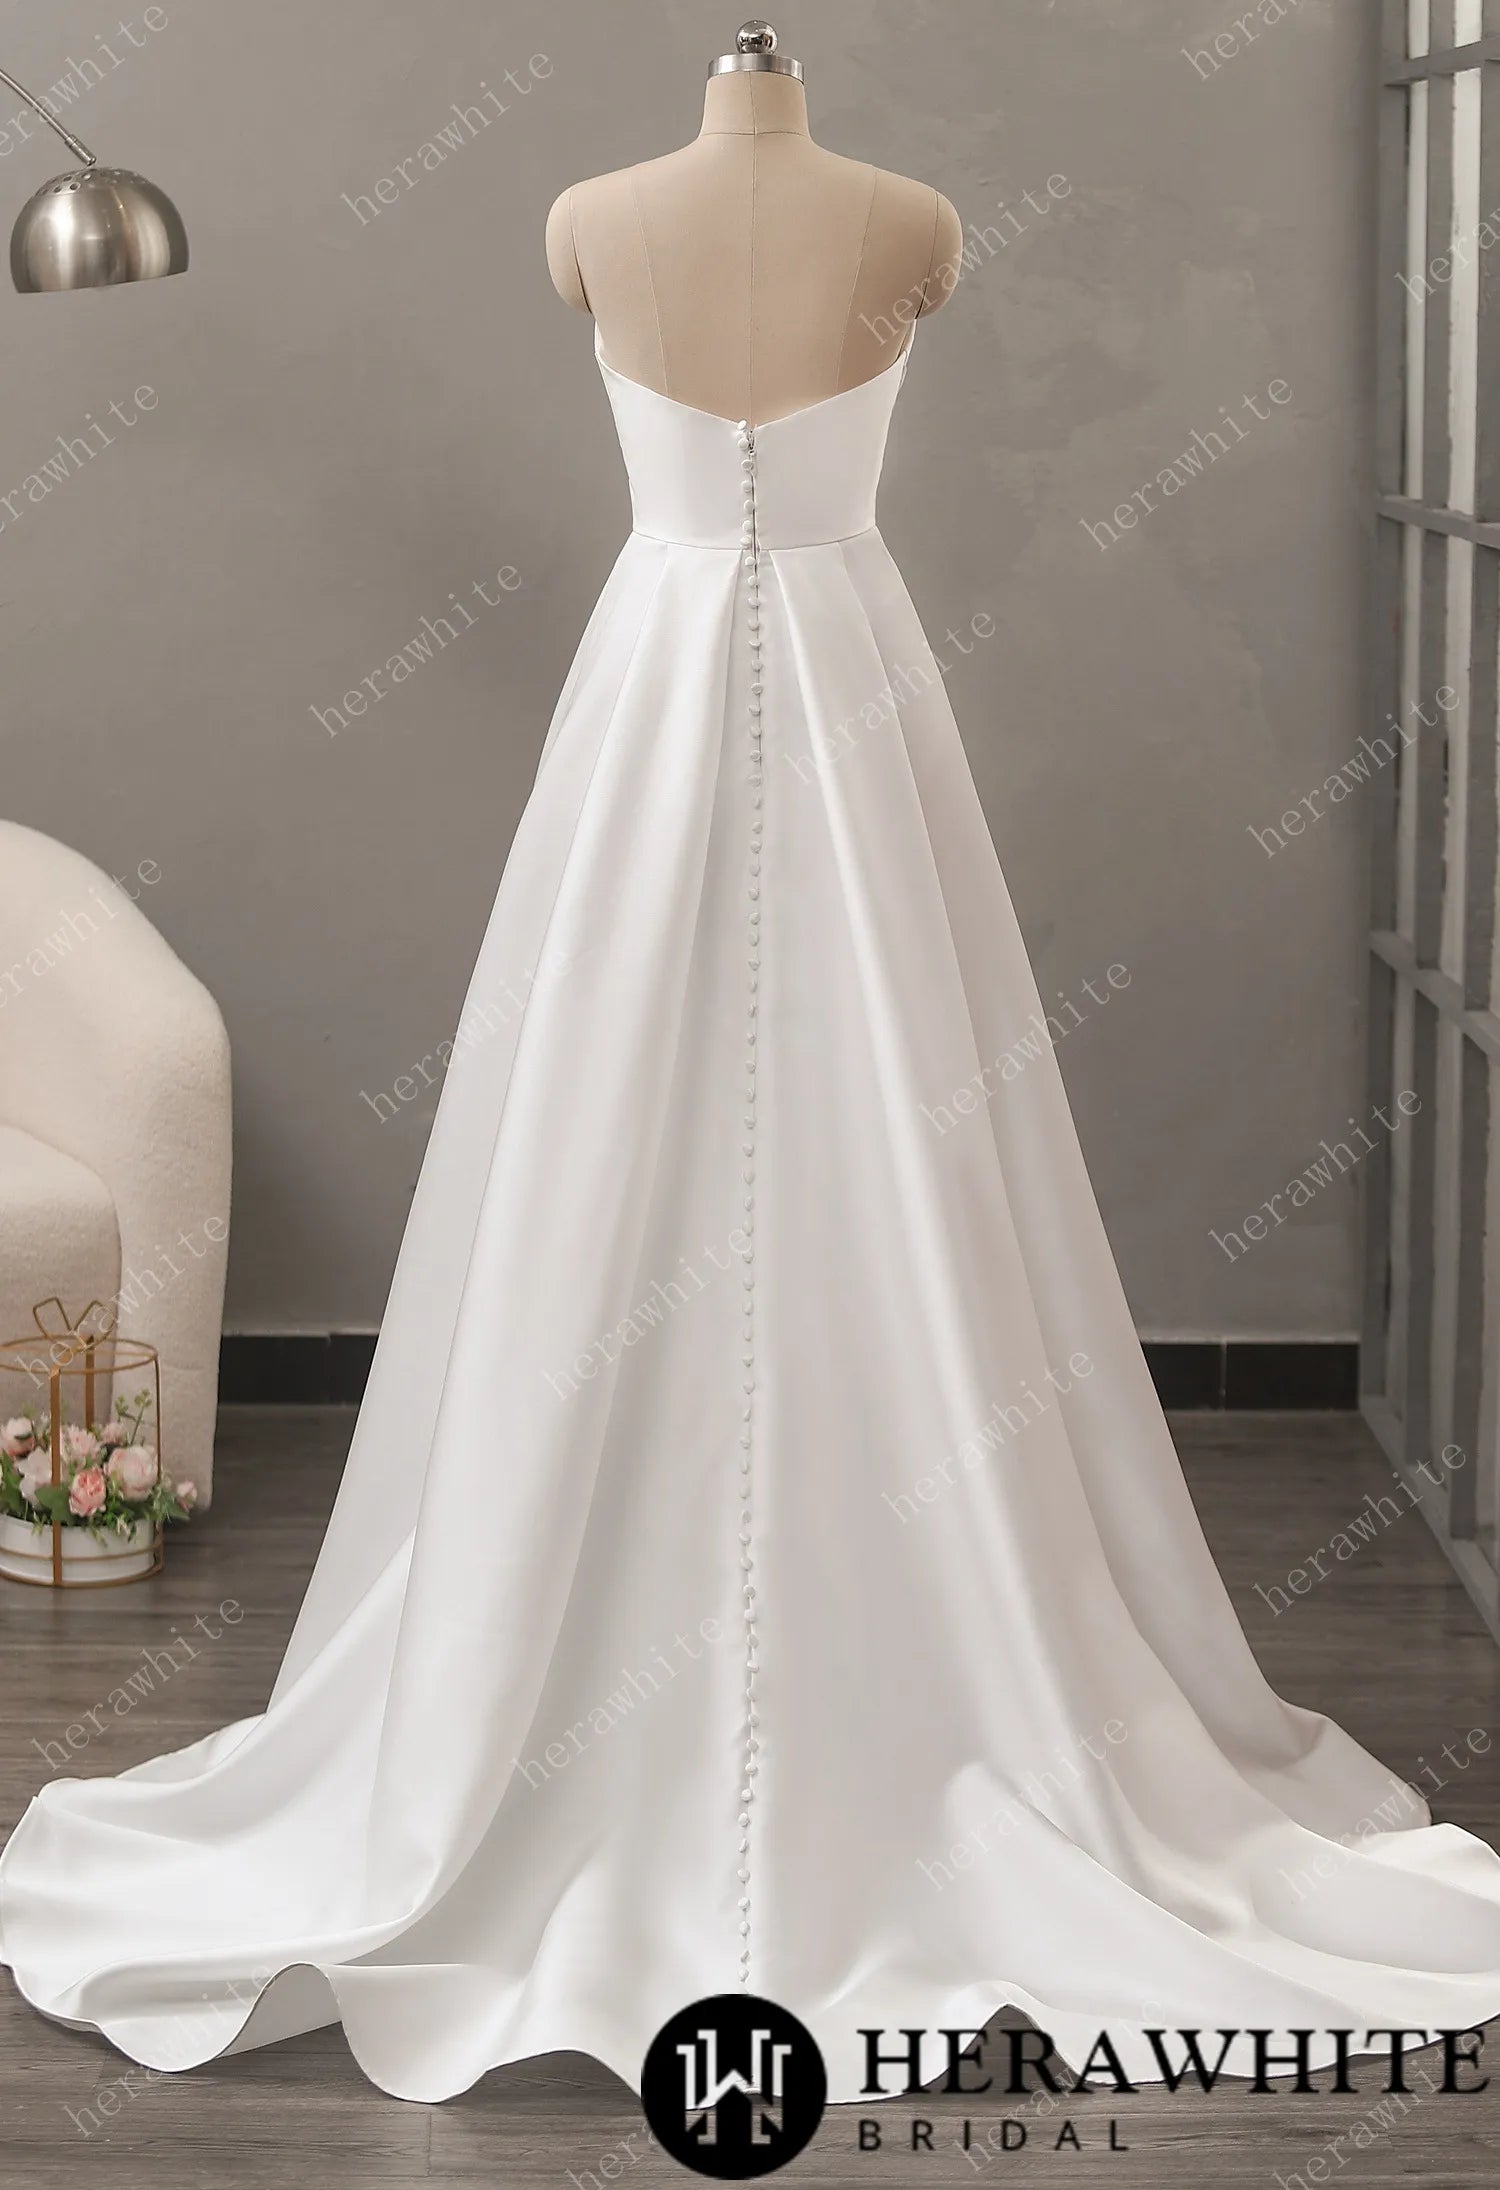 Strapless Mikado A-Line Wedding Dress with Pleated Bodice